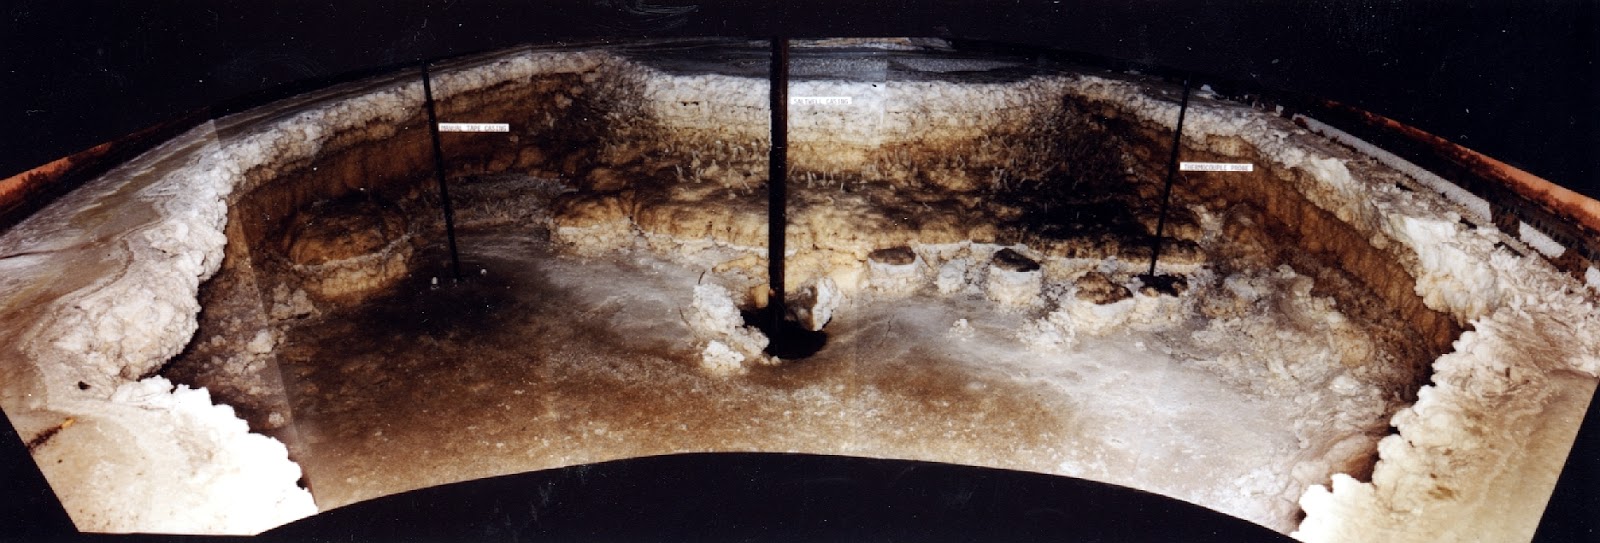 A look at saltcake inside one of Hanford's underground storage tanks.